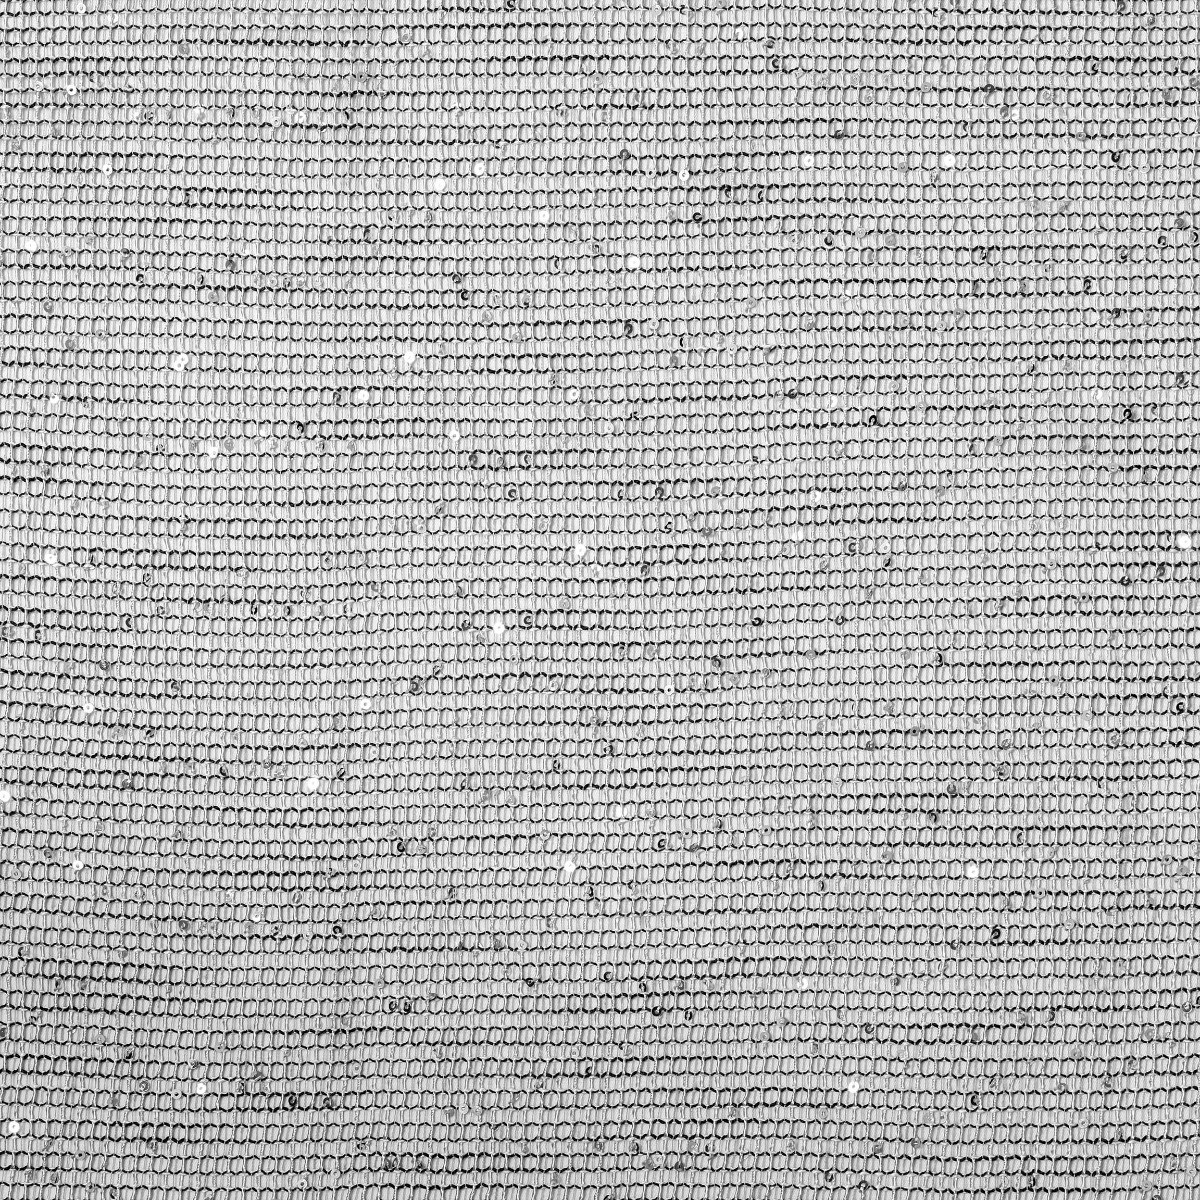  Тюль RETE BLACK, ширина 290 см  - Фото